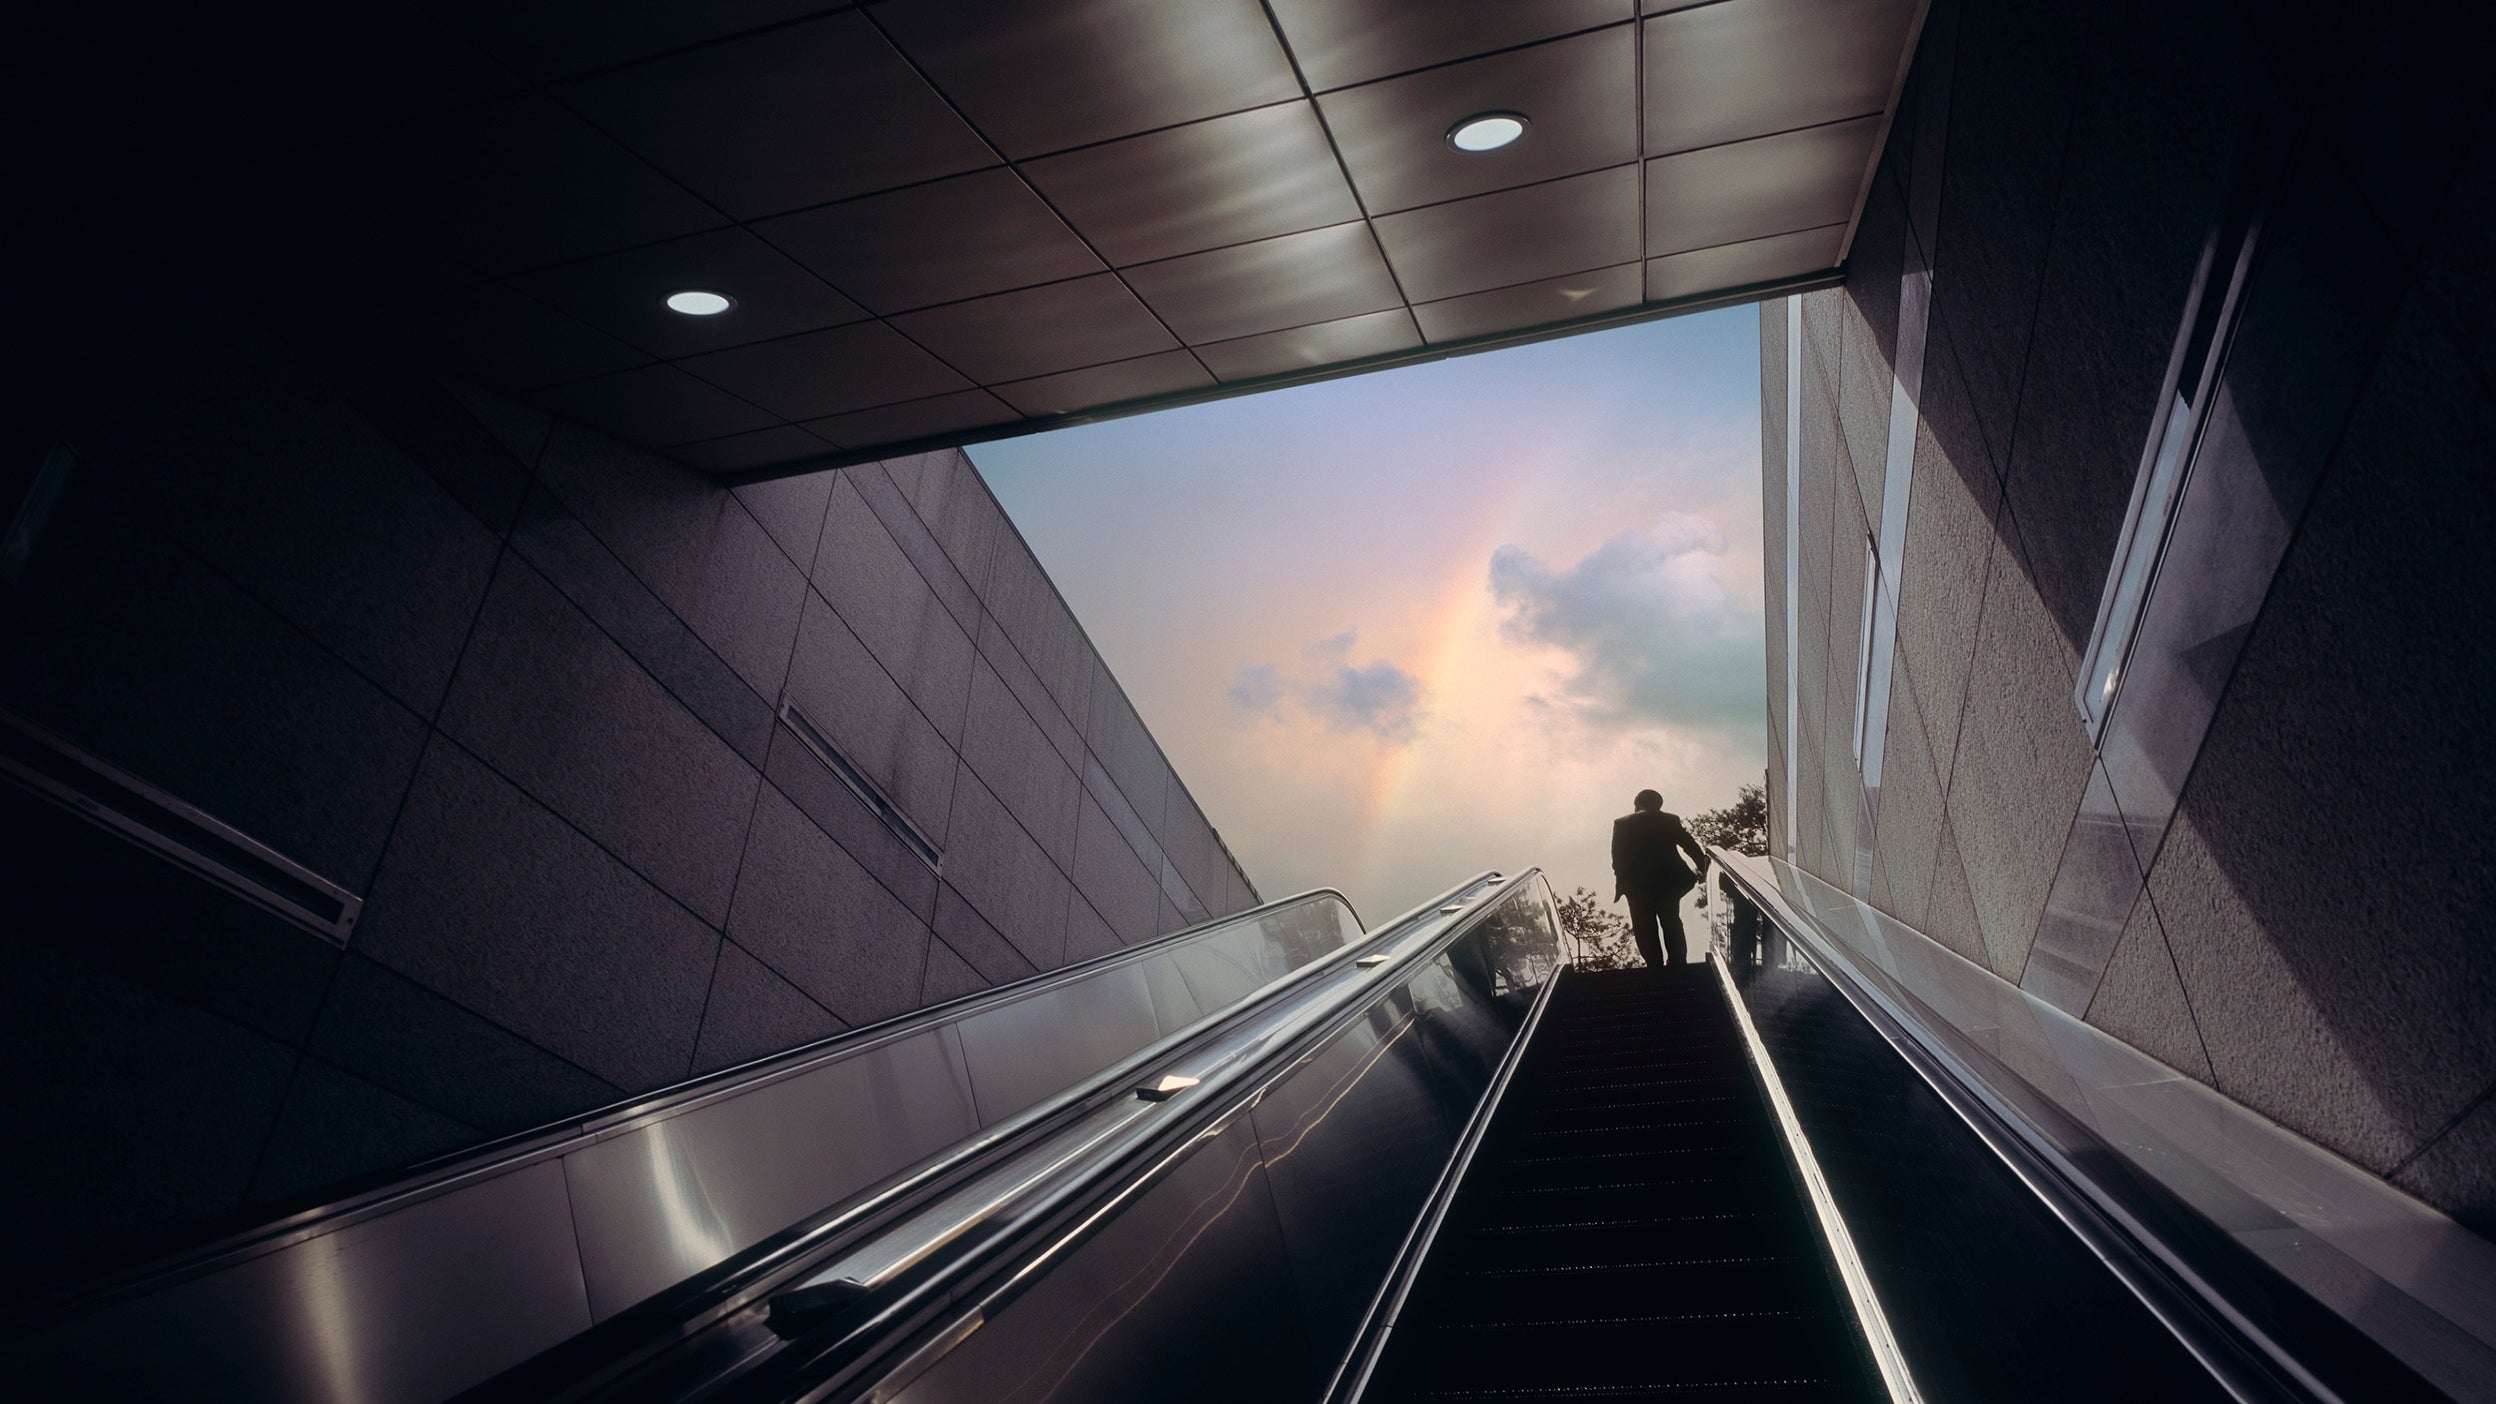 Taking escalator